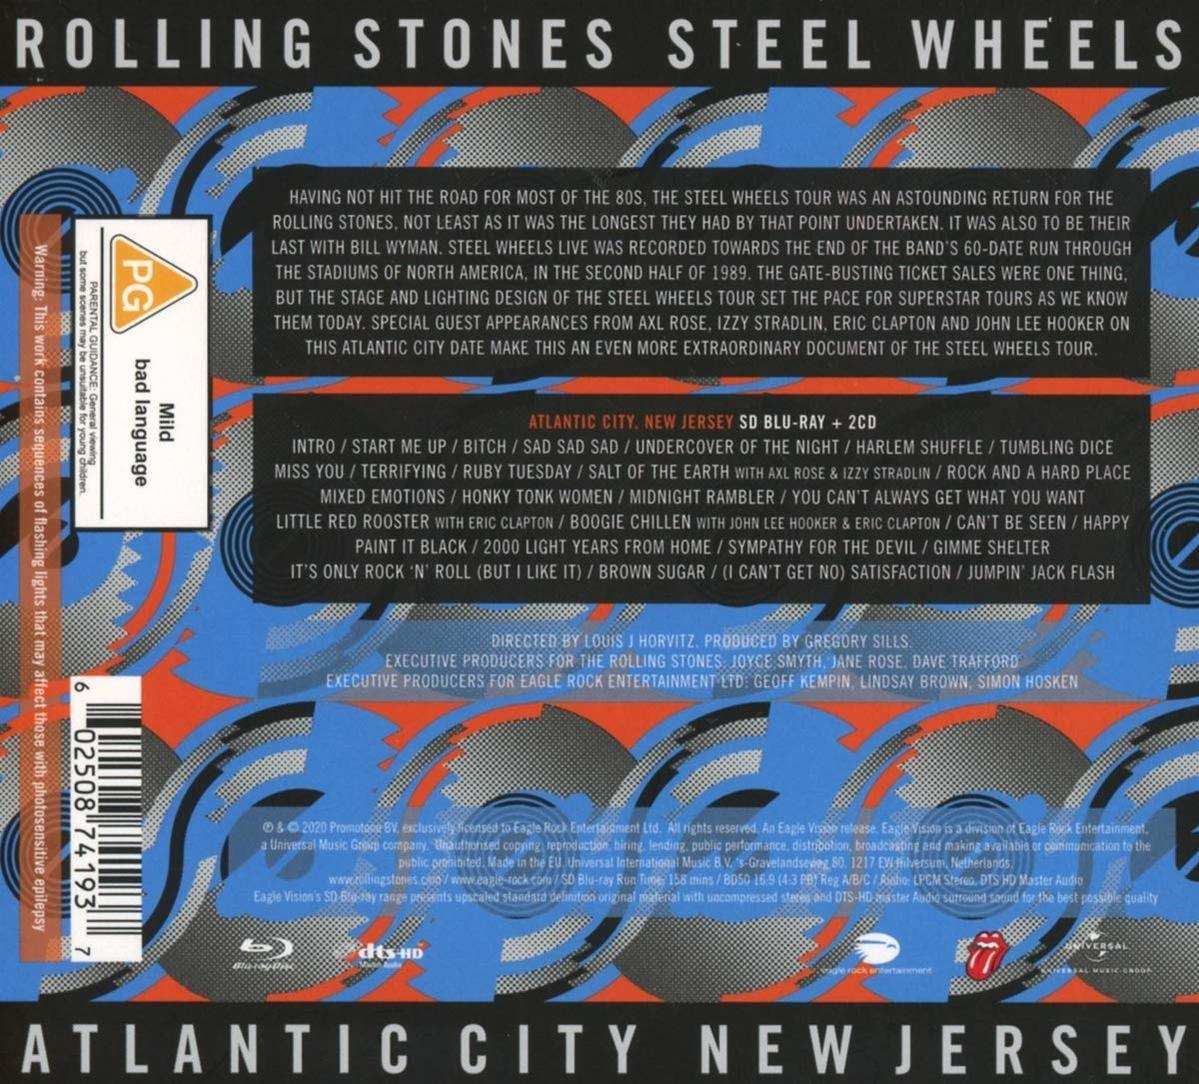 Rolling Live - (Atlantic + (Blu-ray Wheels 1989,BR+2CD) - The Steel CD) City Stones